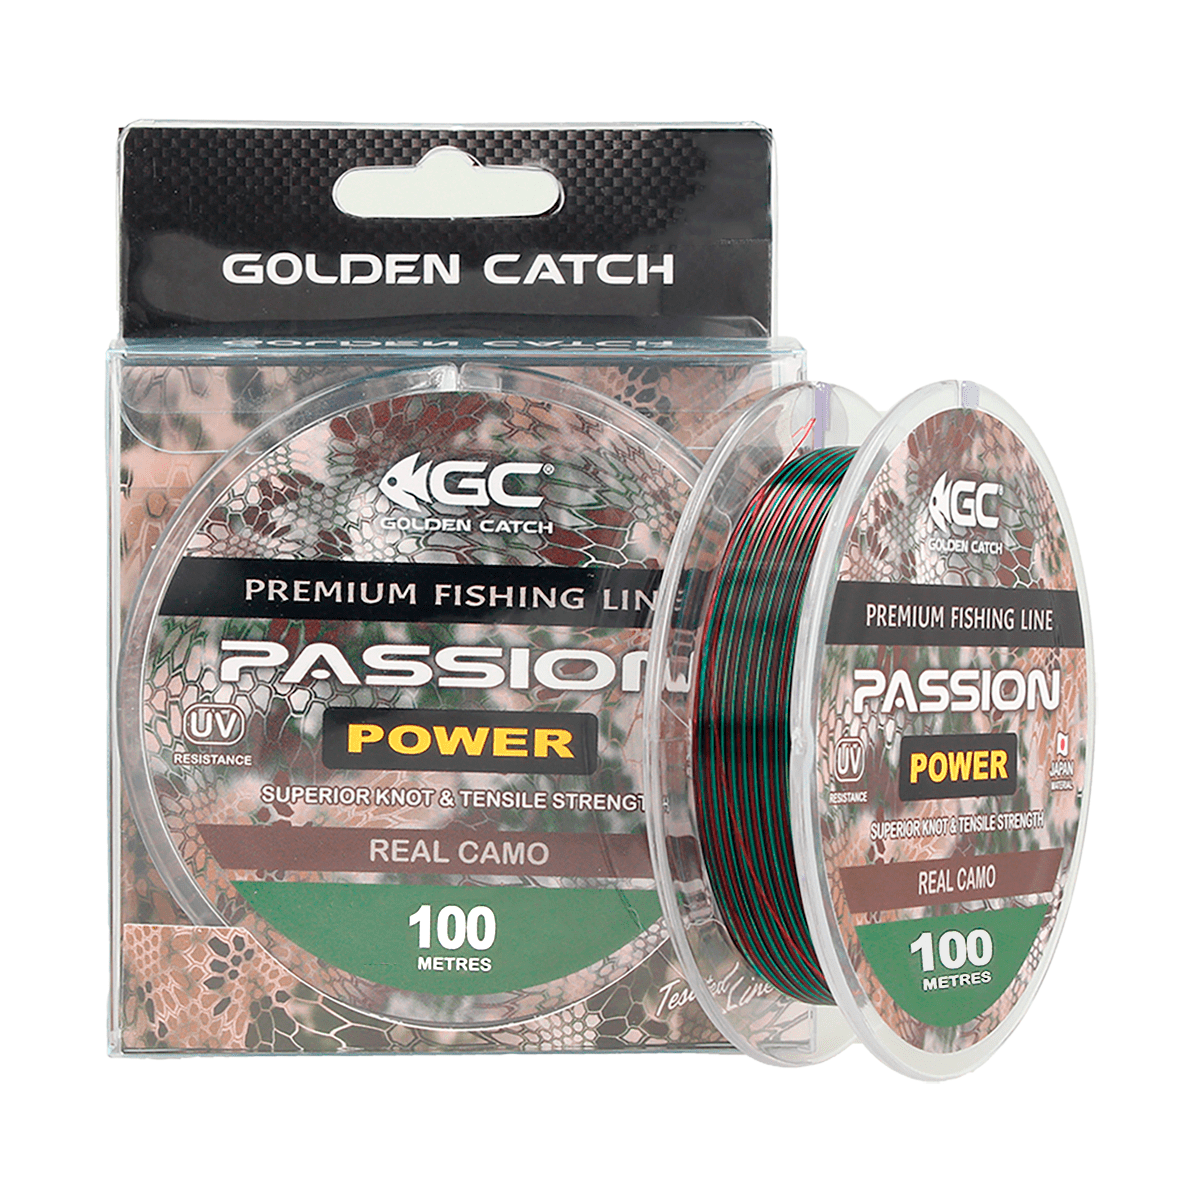 Golden Catch Nylon Line Passion Power 100m Real Camo